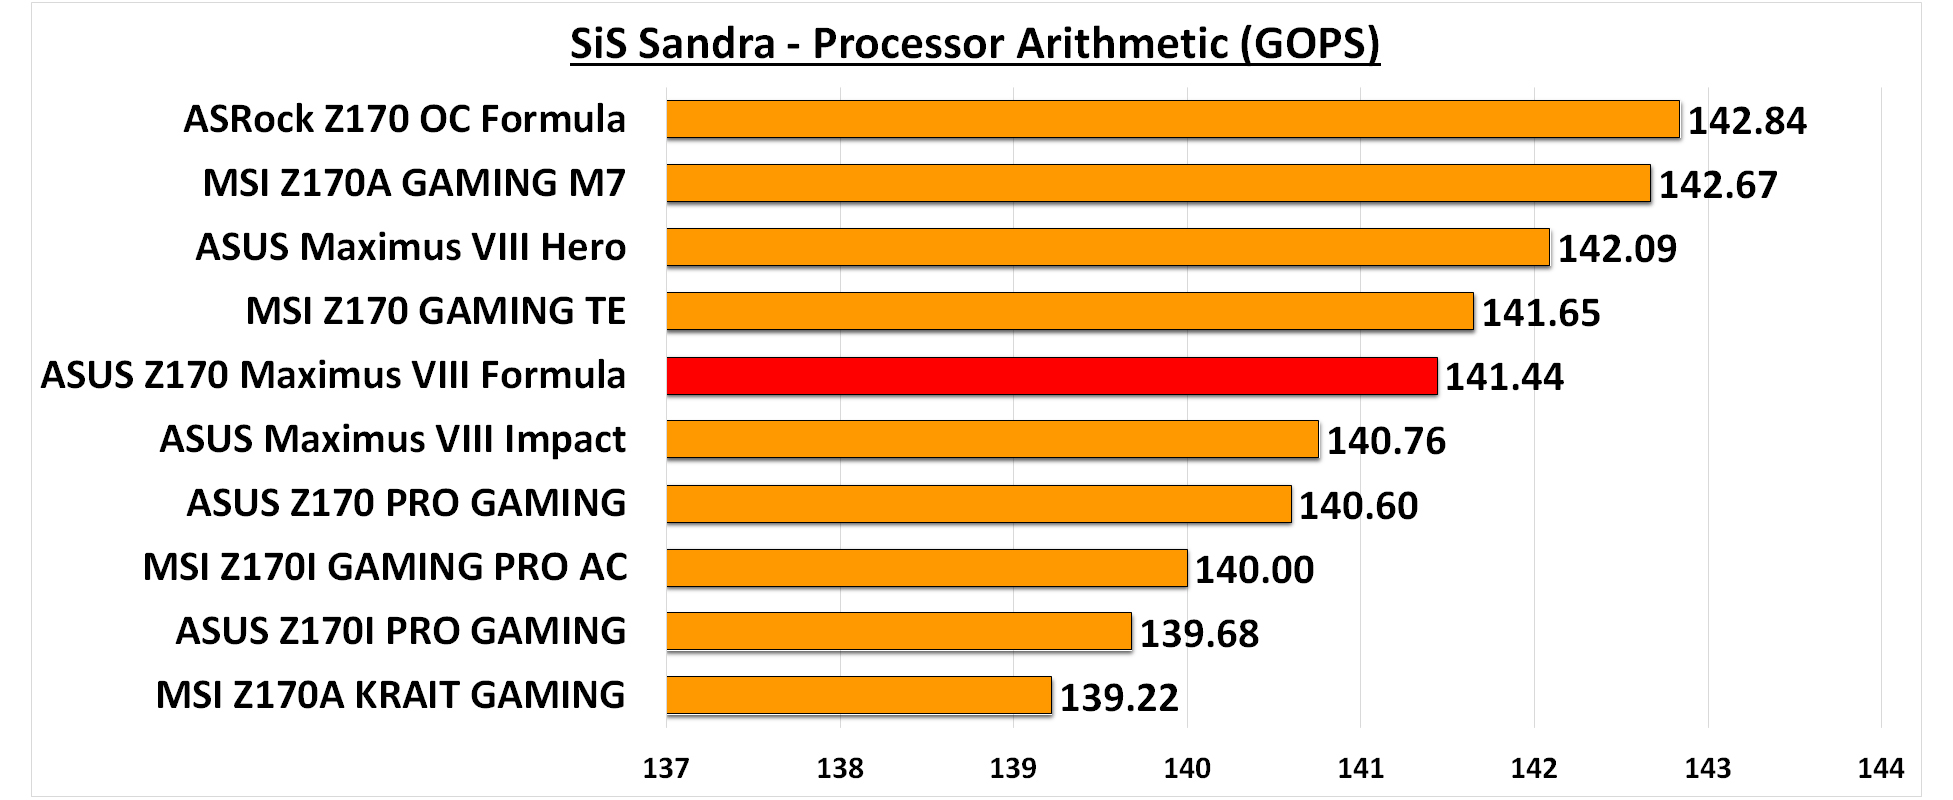 SiS Sandra Processor Arithmetic